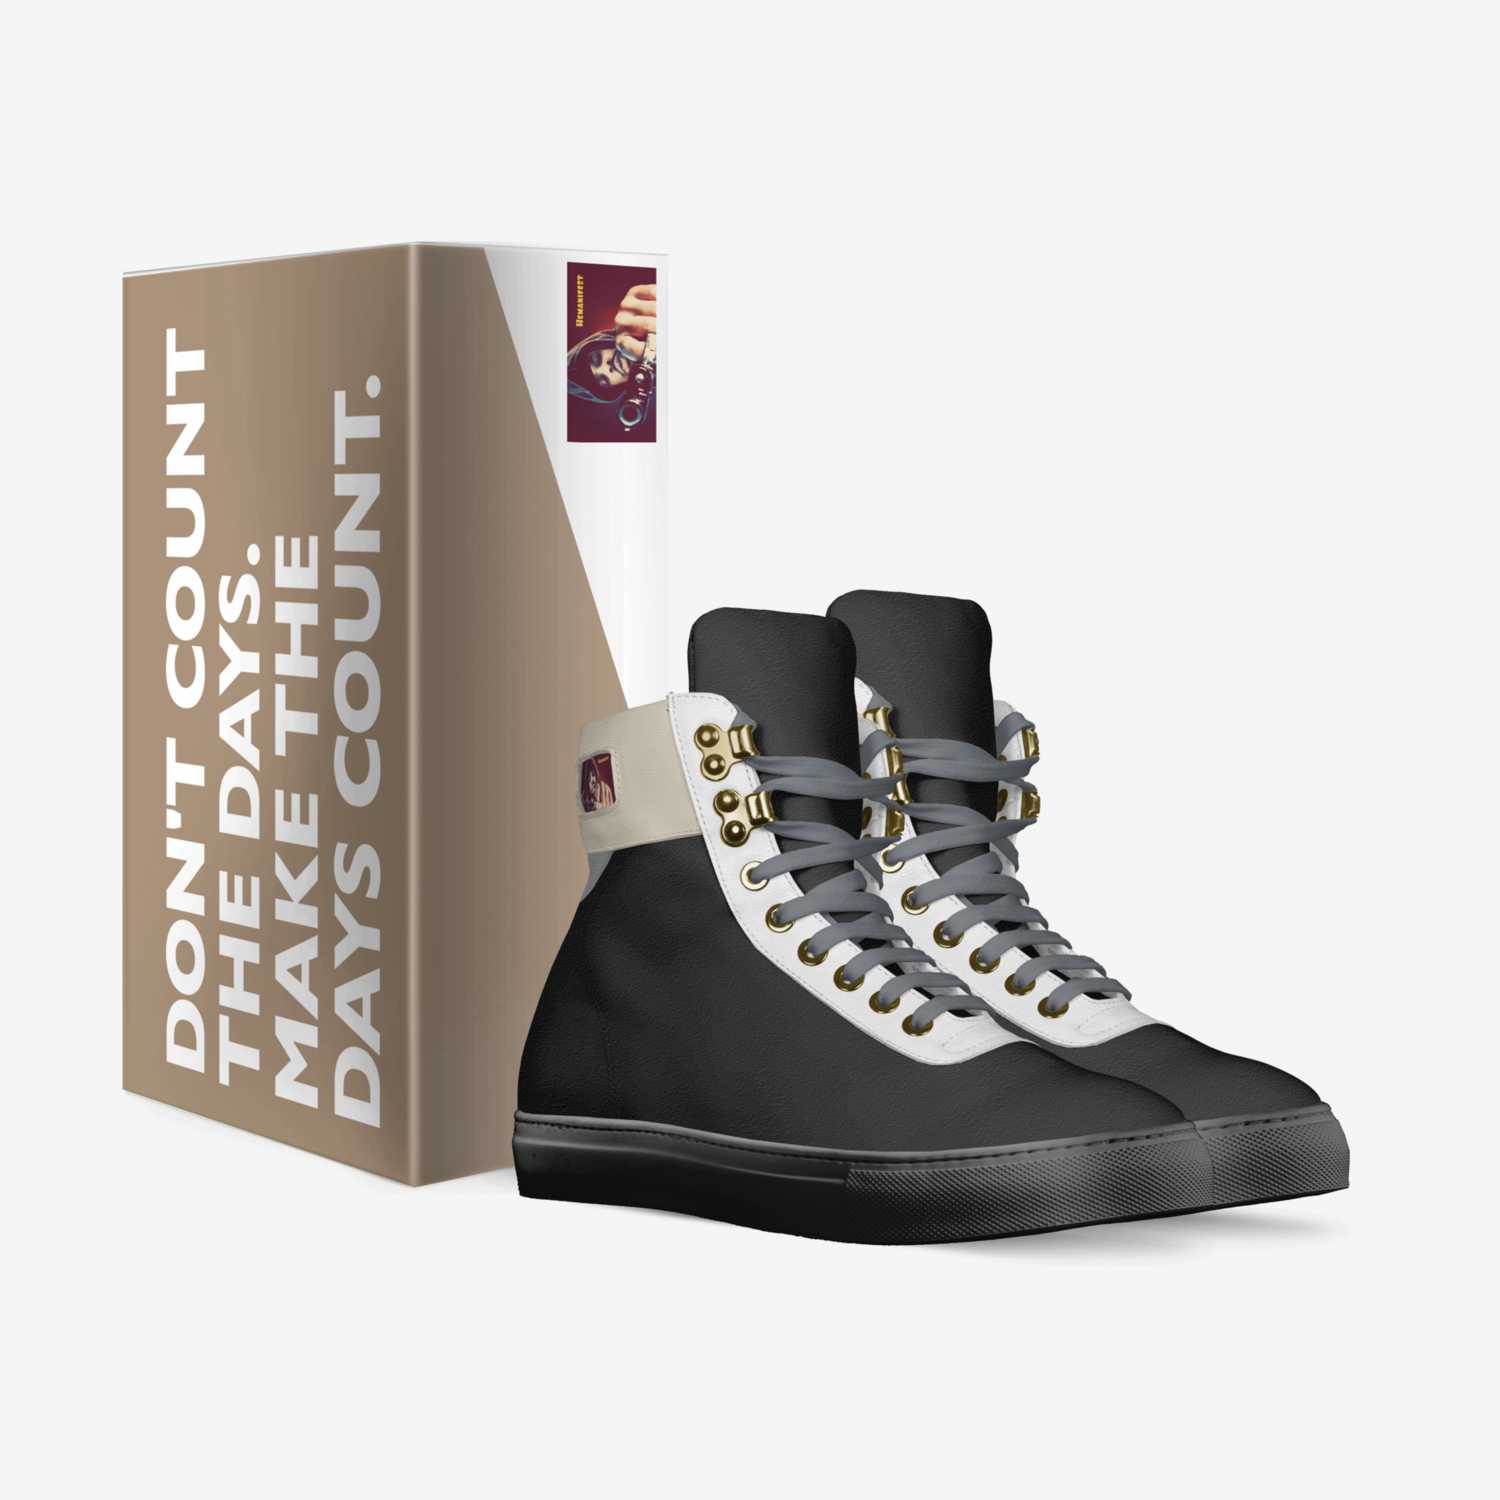 Hemanifezt  custom made in Italy shoes by Sean Hemanifezt Cothrine | Box view